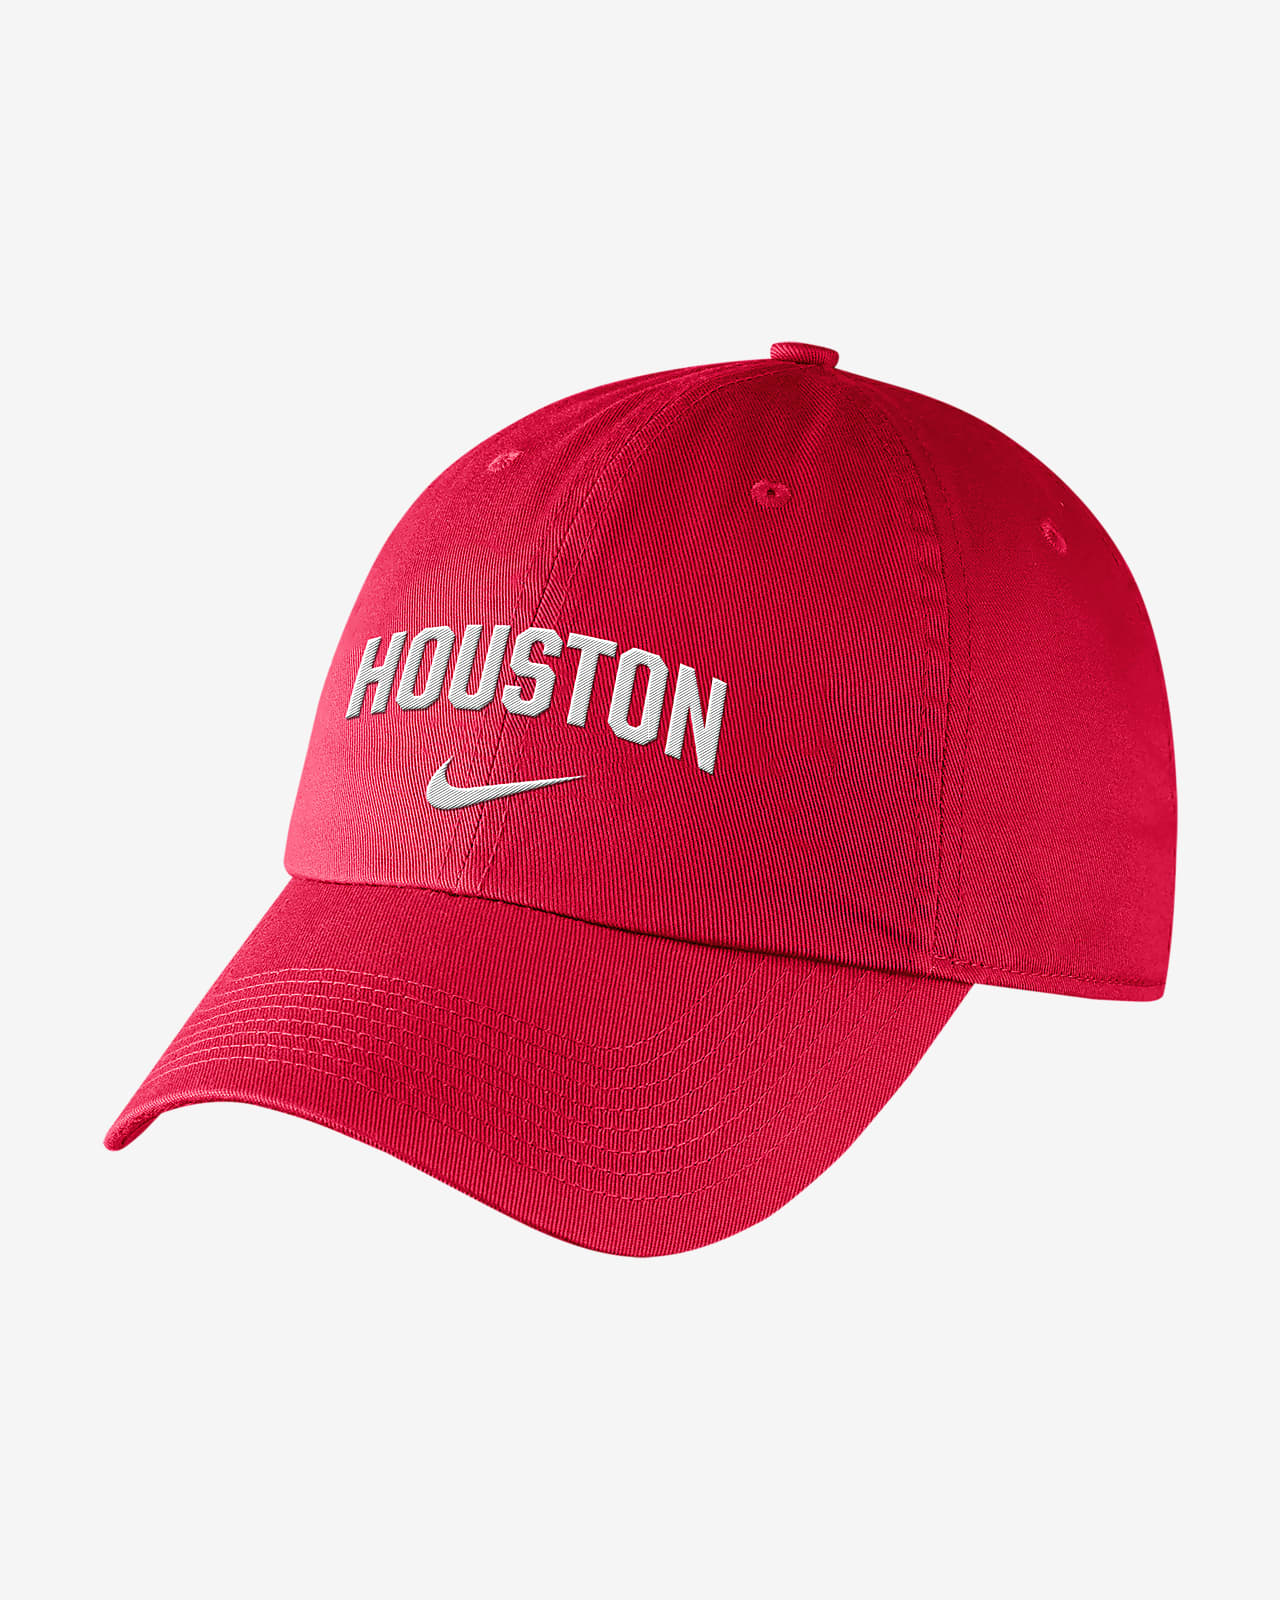 Nike College (Houston) Hat